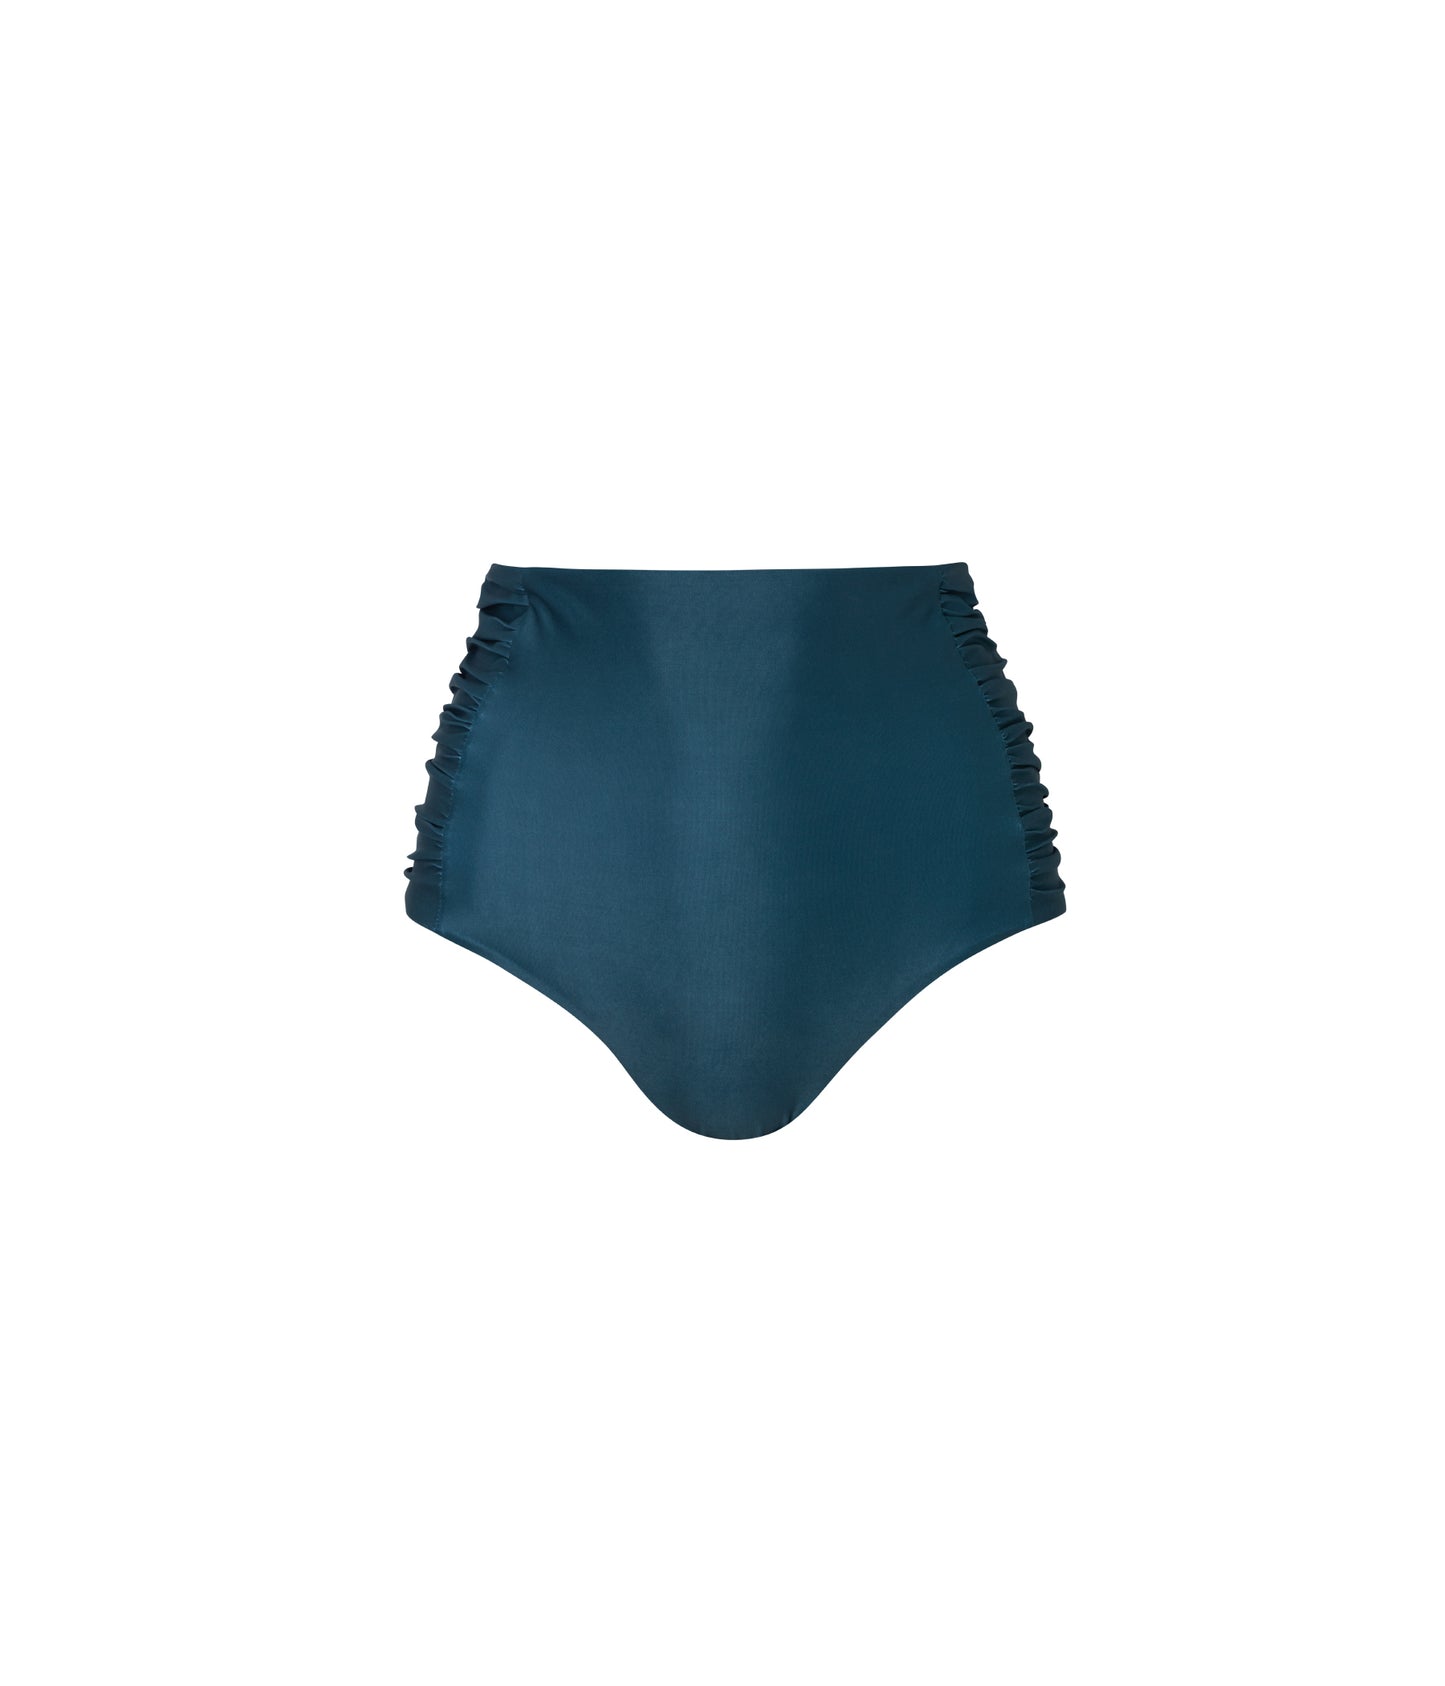 Verdelimon - Bikini Bottom - Mompos - Printed - Petrol Blue - Front